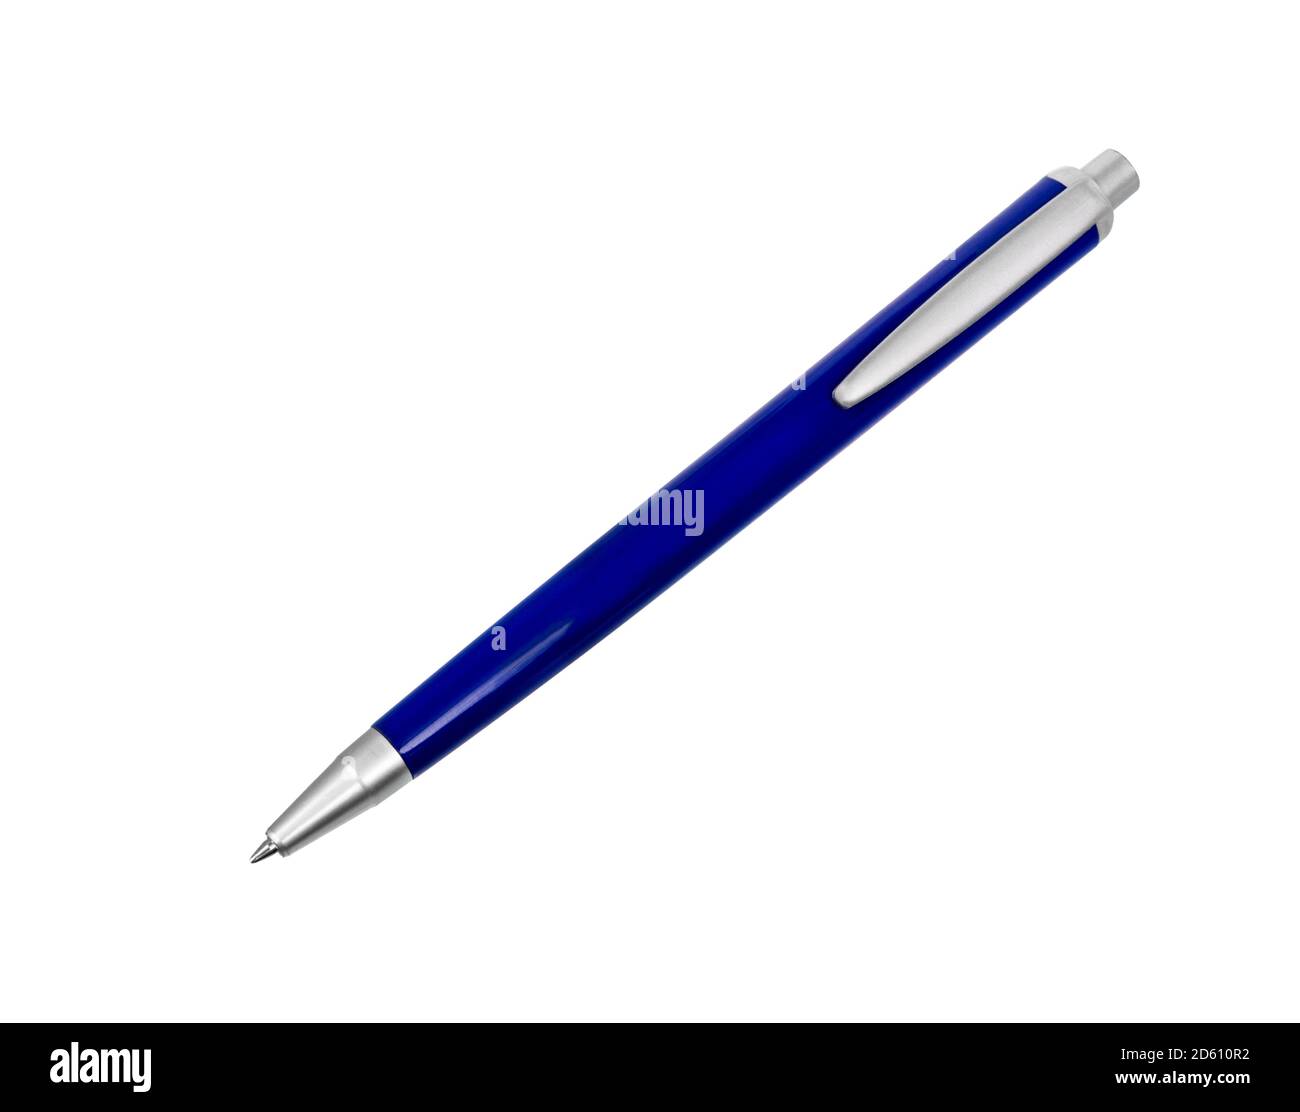 Metal pen isolated on white background. Blue ballpoint pen cut out. Metallic disposable biro pen. Stock Photo